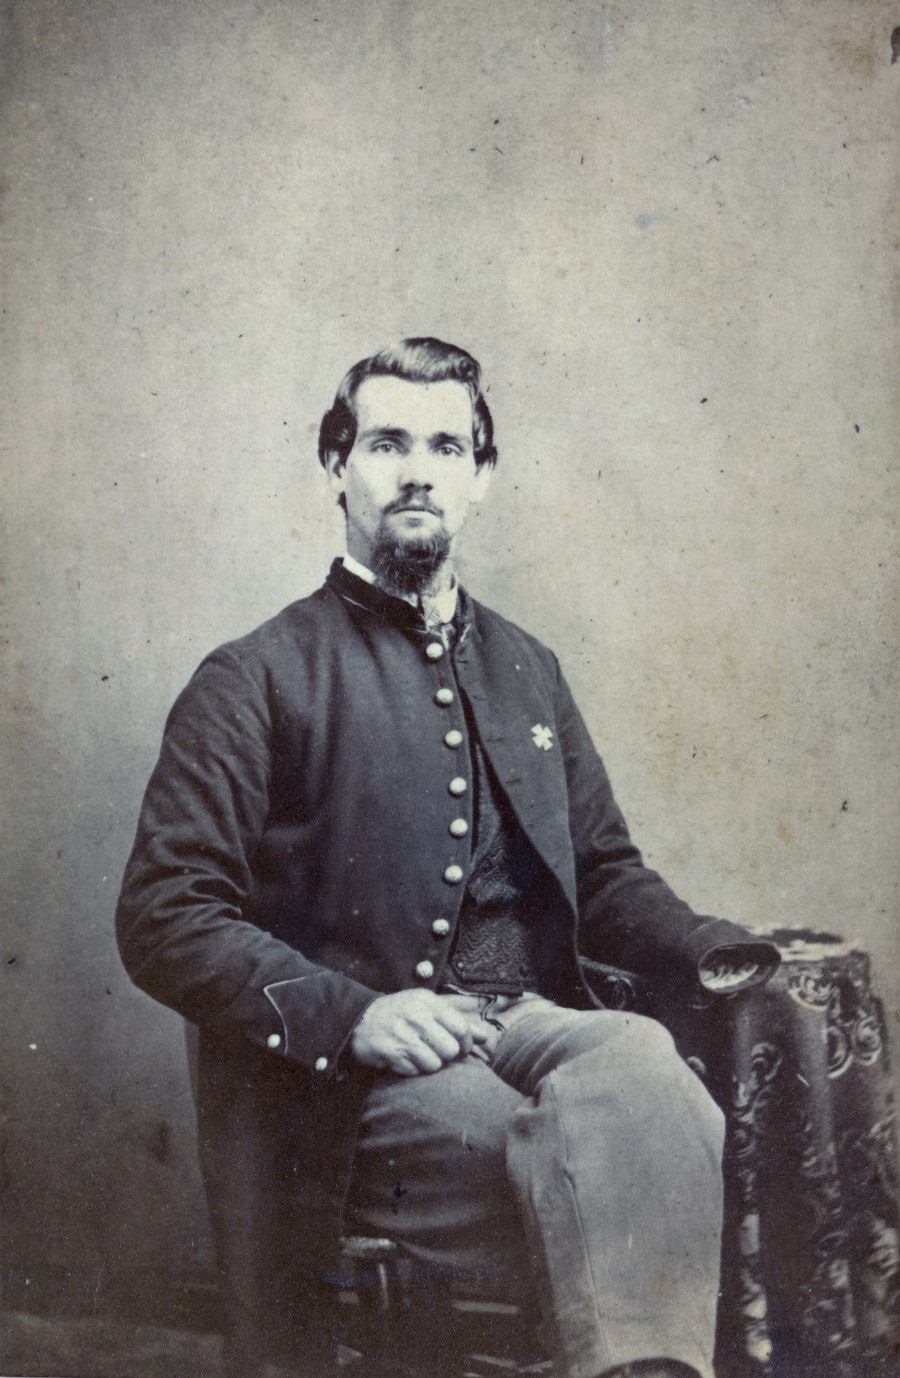 Sergeant Thomas Plunkett of Co. E, 21st Massachusetts Infantry Regiment in uniform with American flag, 1863.